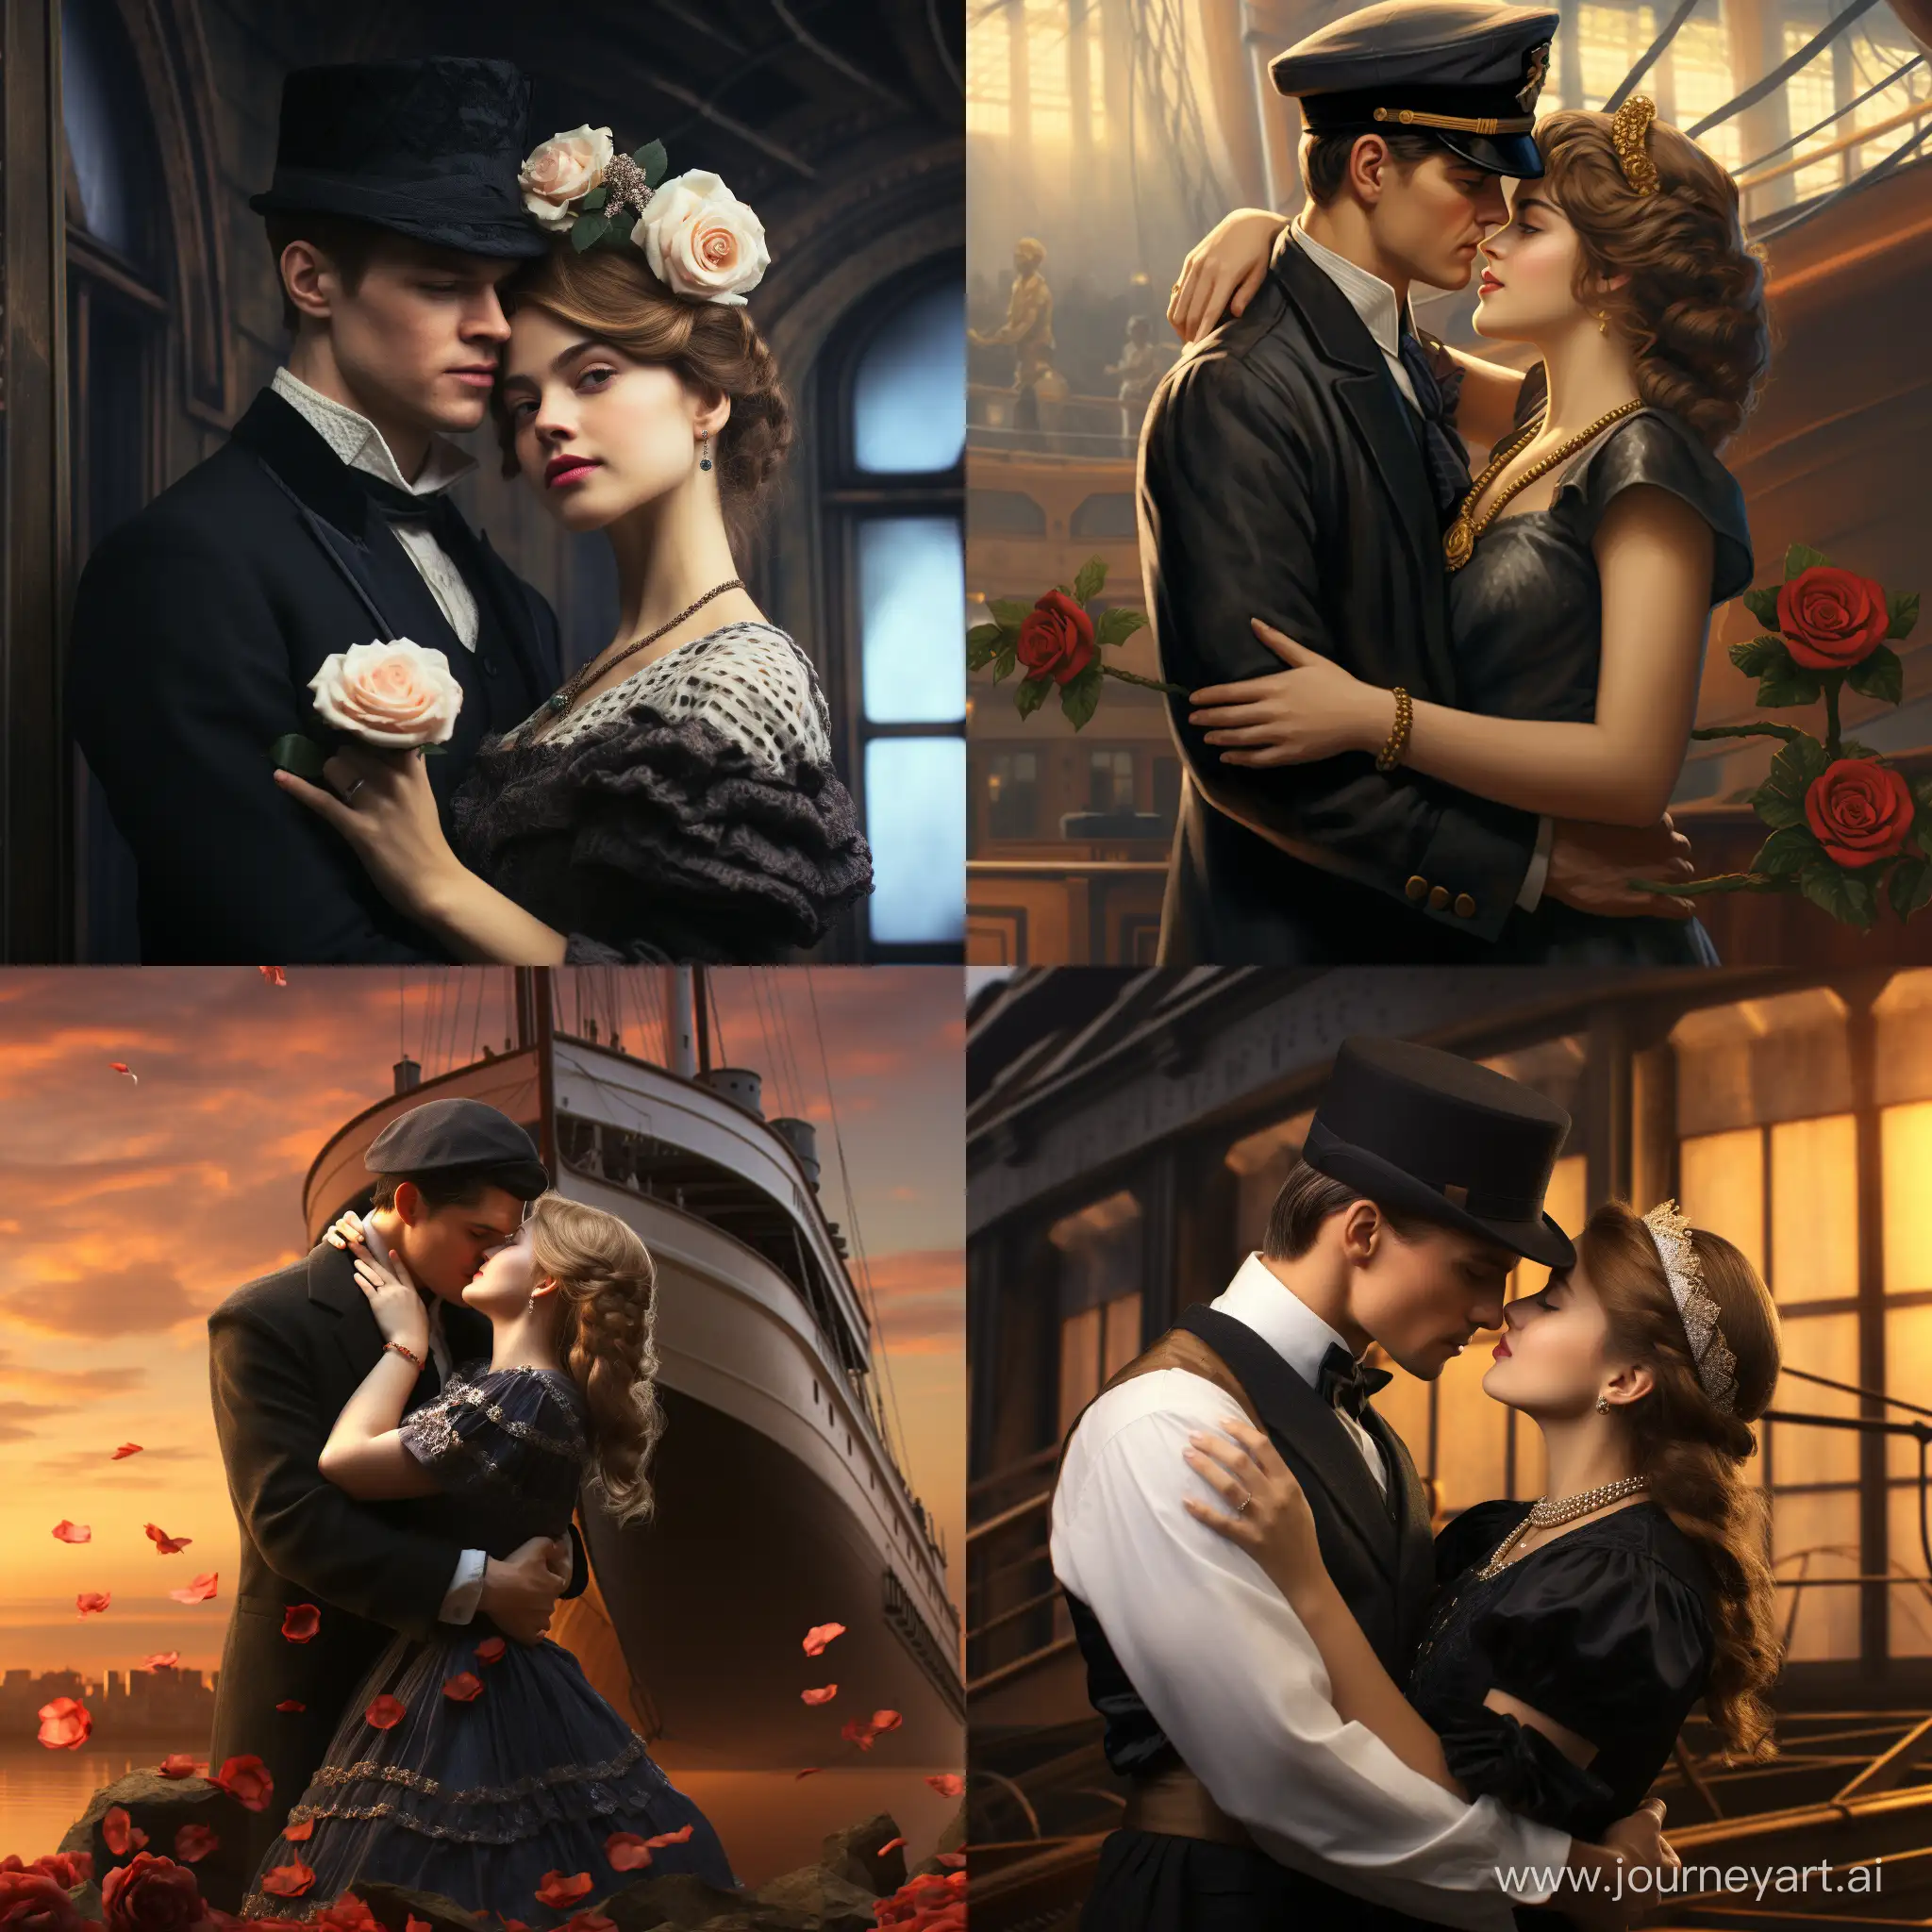 Romantic-Titanic-Day-Art-with-Aspect-Ratio-11